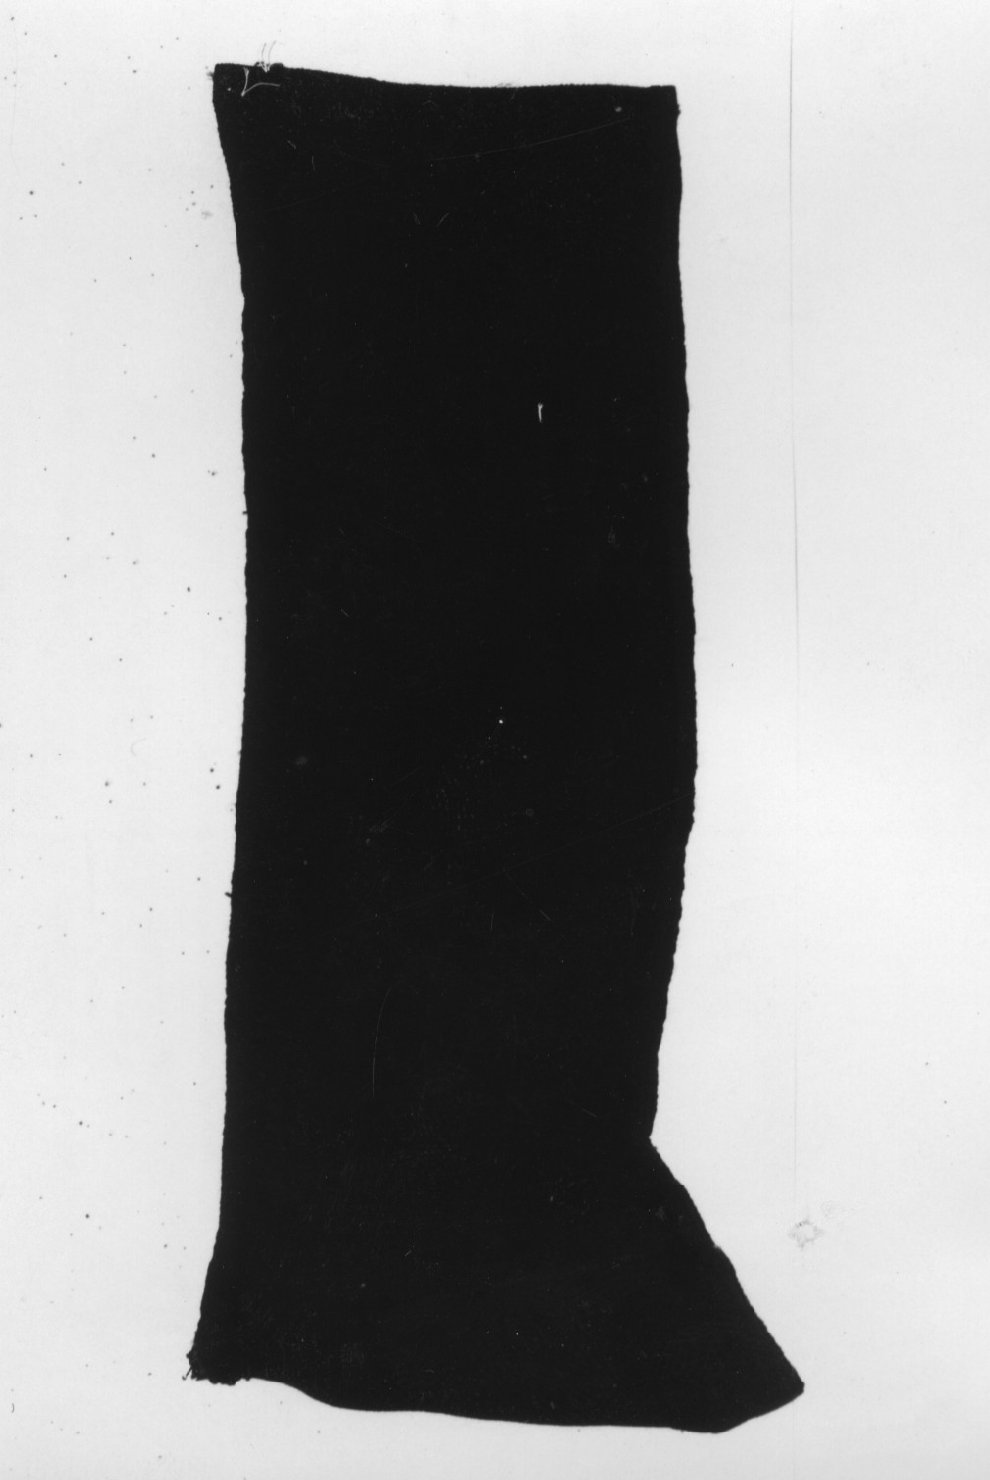 uosa, costume maschile - manifattura sarda (sec. XIX)